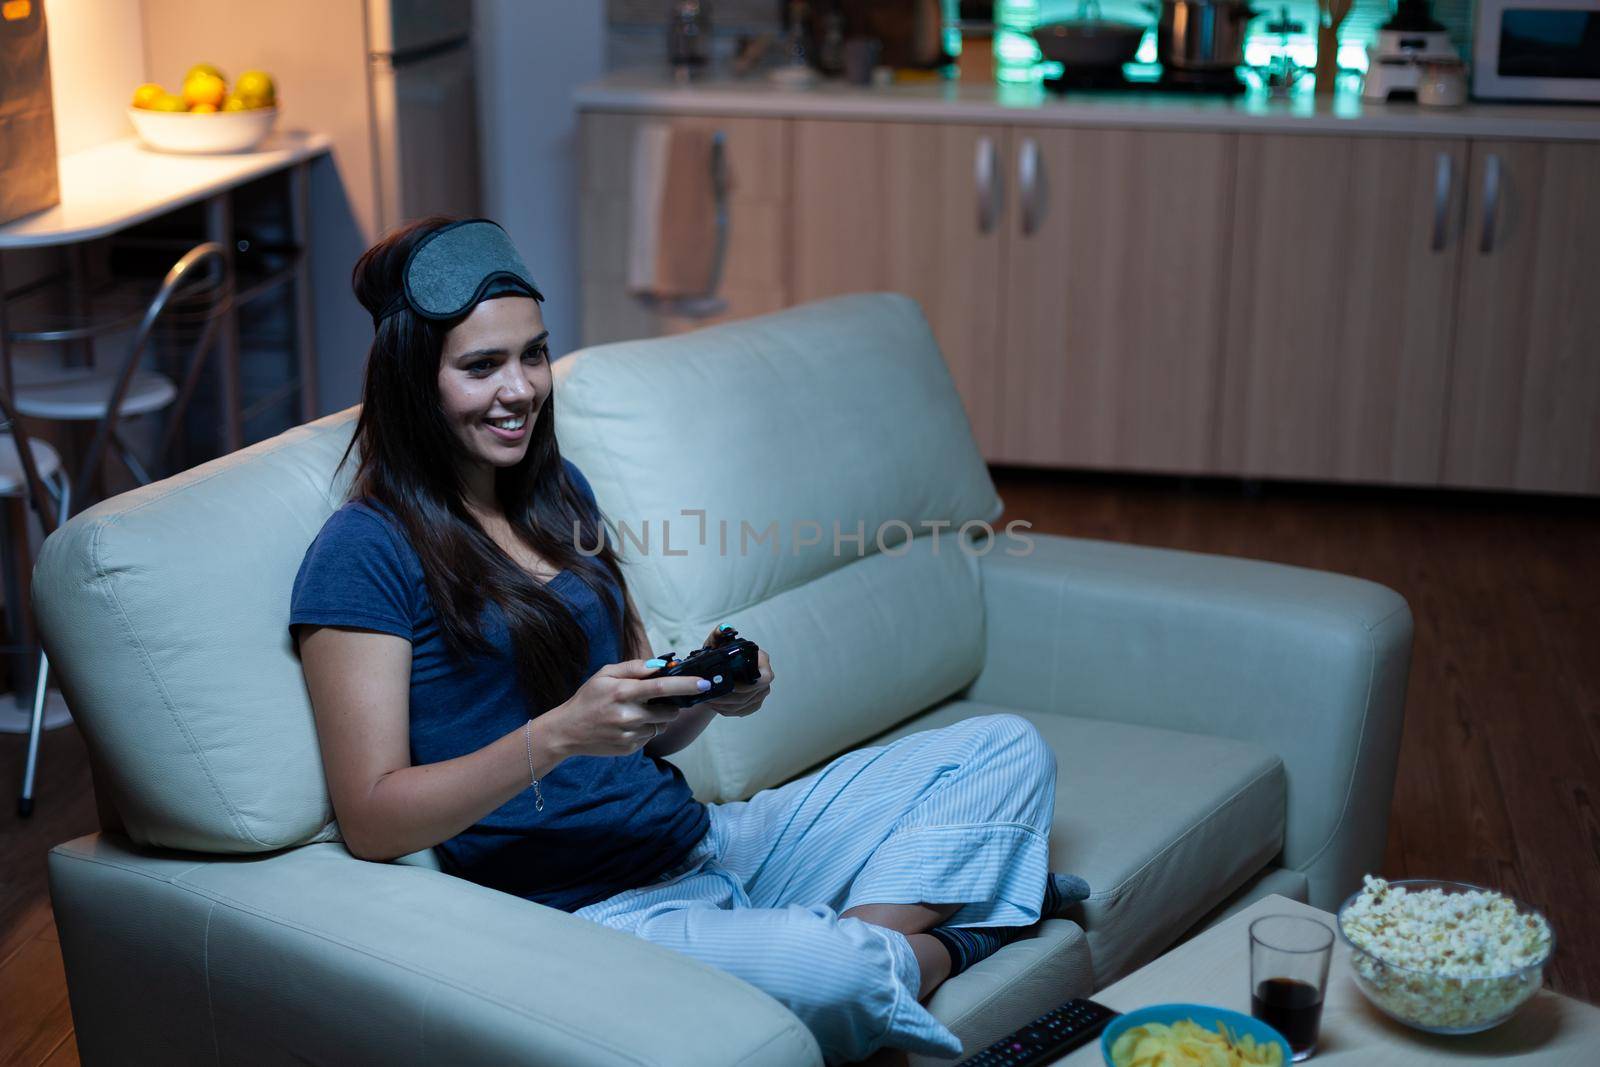 Gamer using joystick playing video games by DCStudio